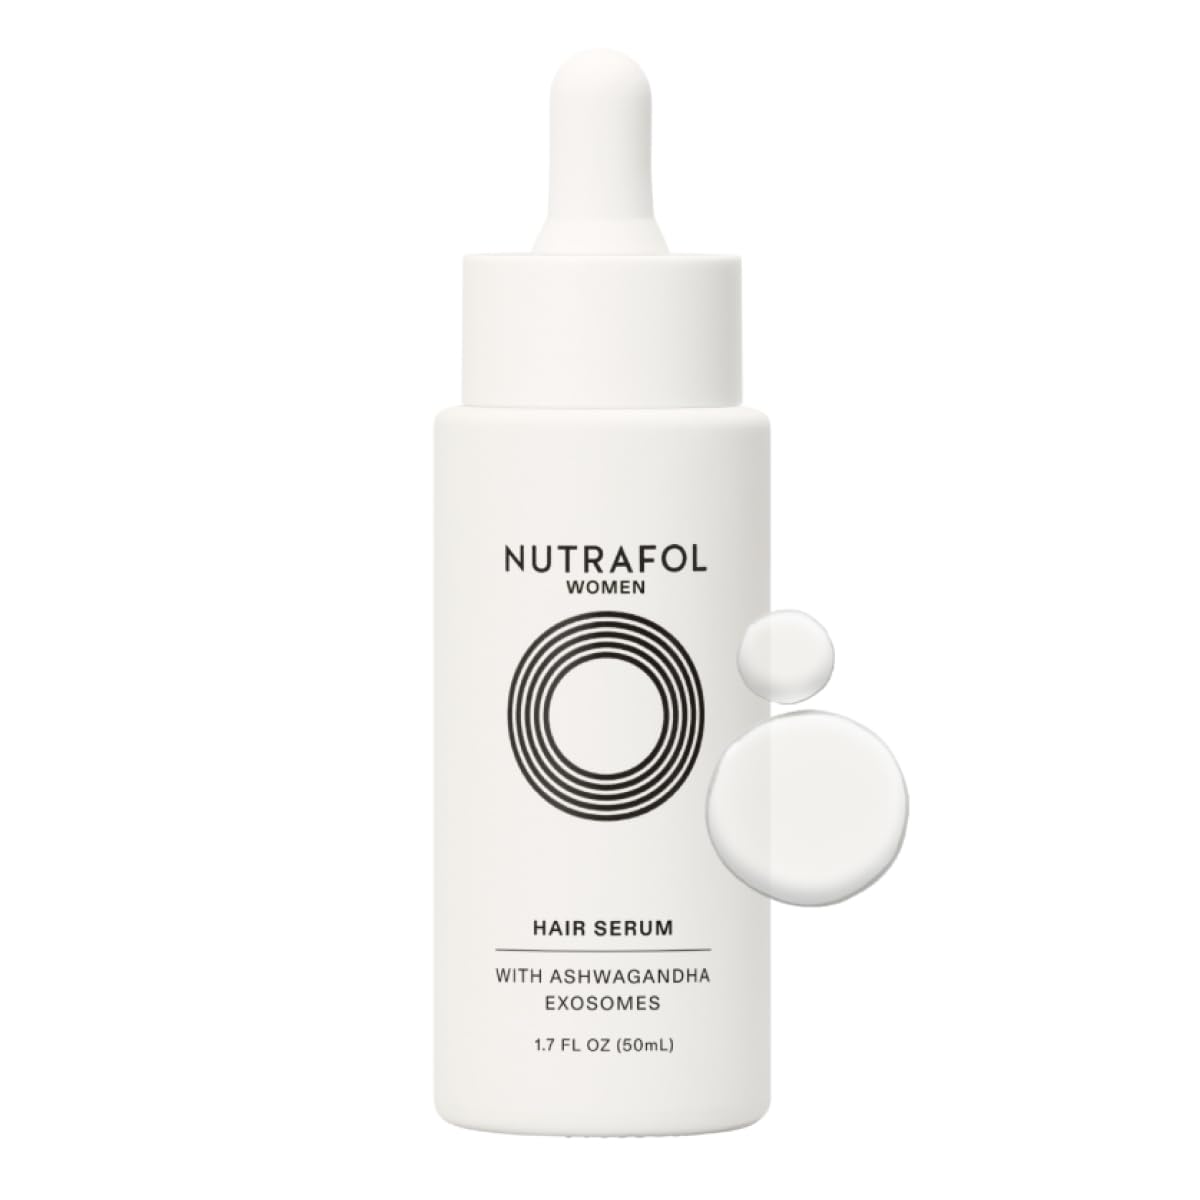 Nutrafol 女士护发精华素，支持明显更浓密、更强韧的头发，纯素，轻盈且快速吸收 - 1.7 液量盎司，1...